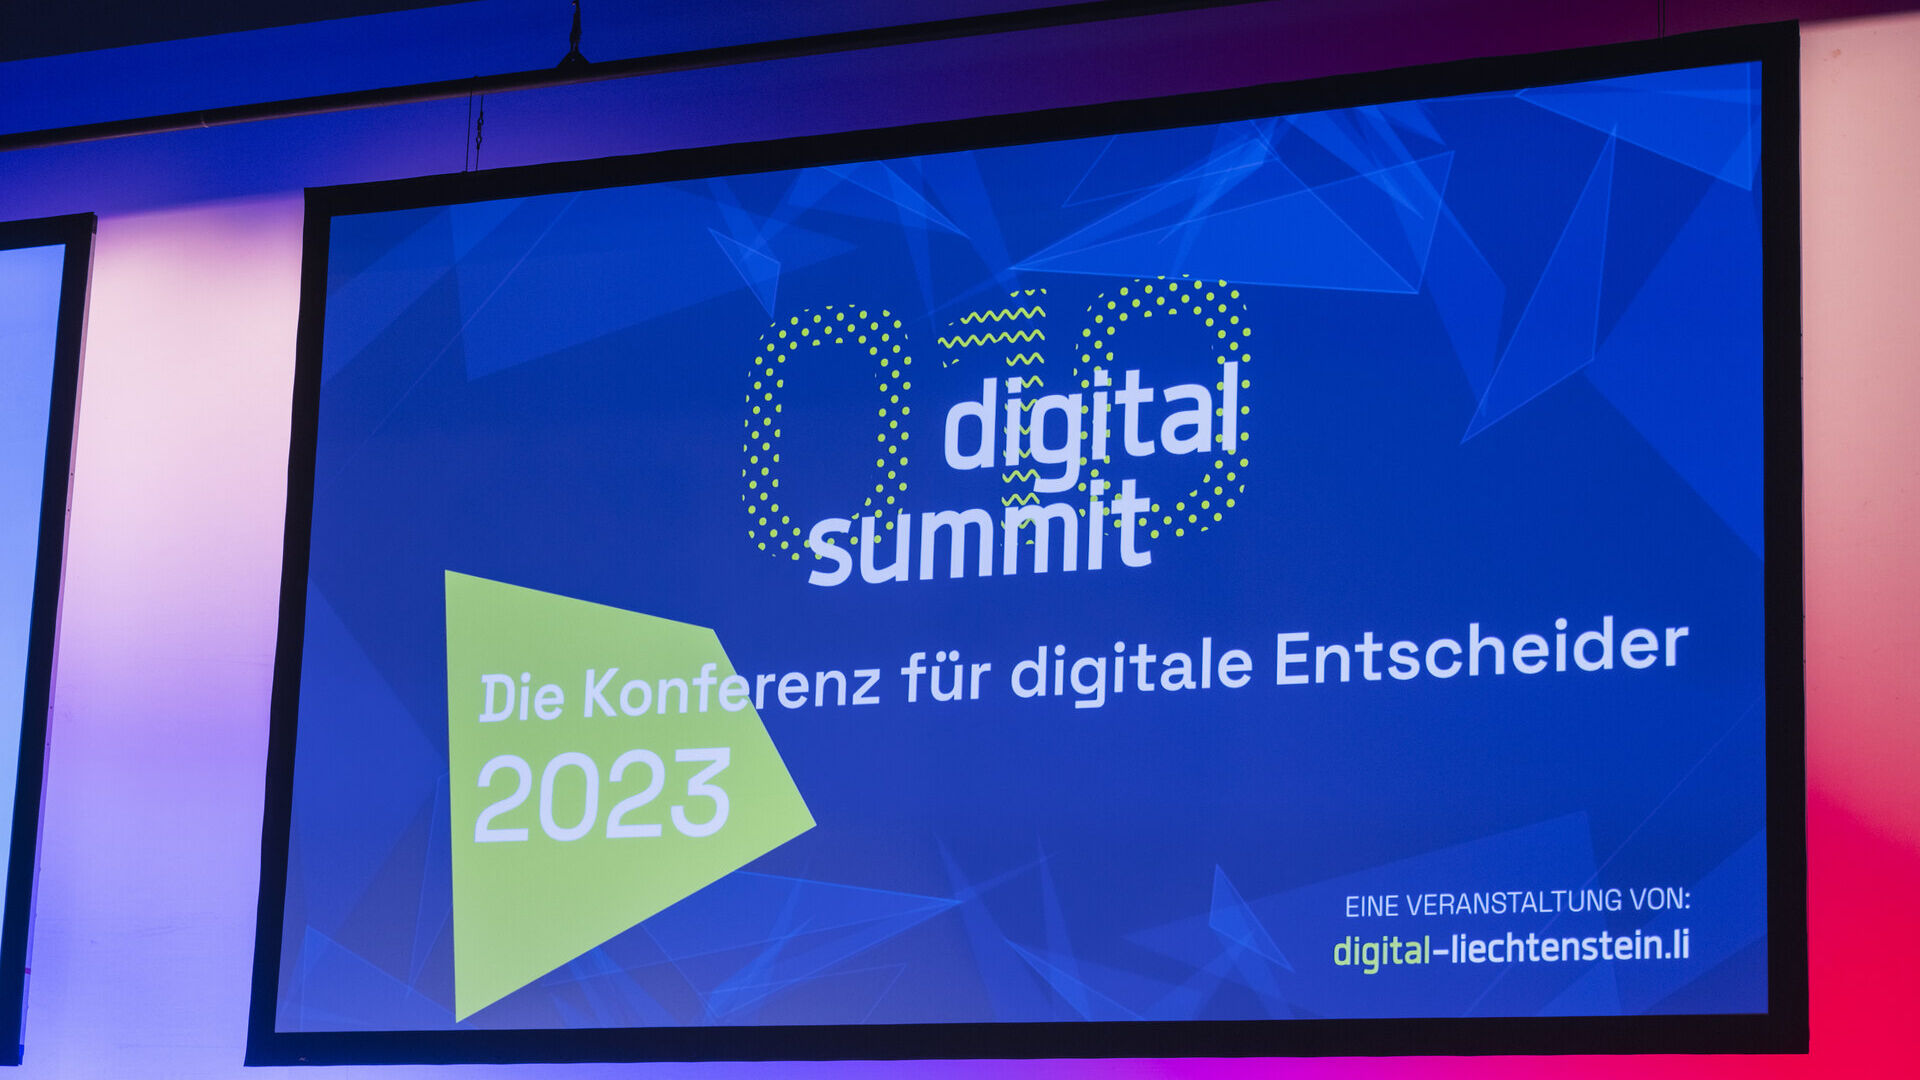 Digital Summit 2023: этап